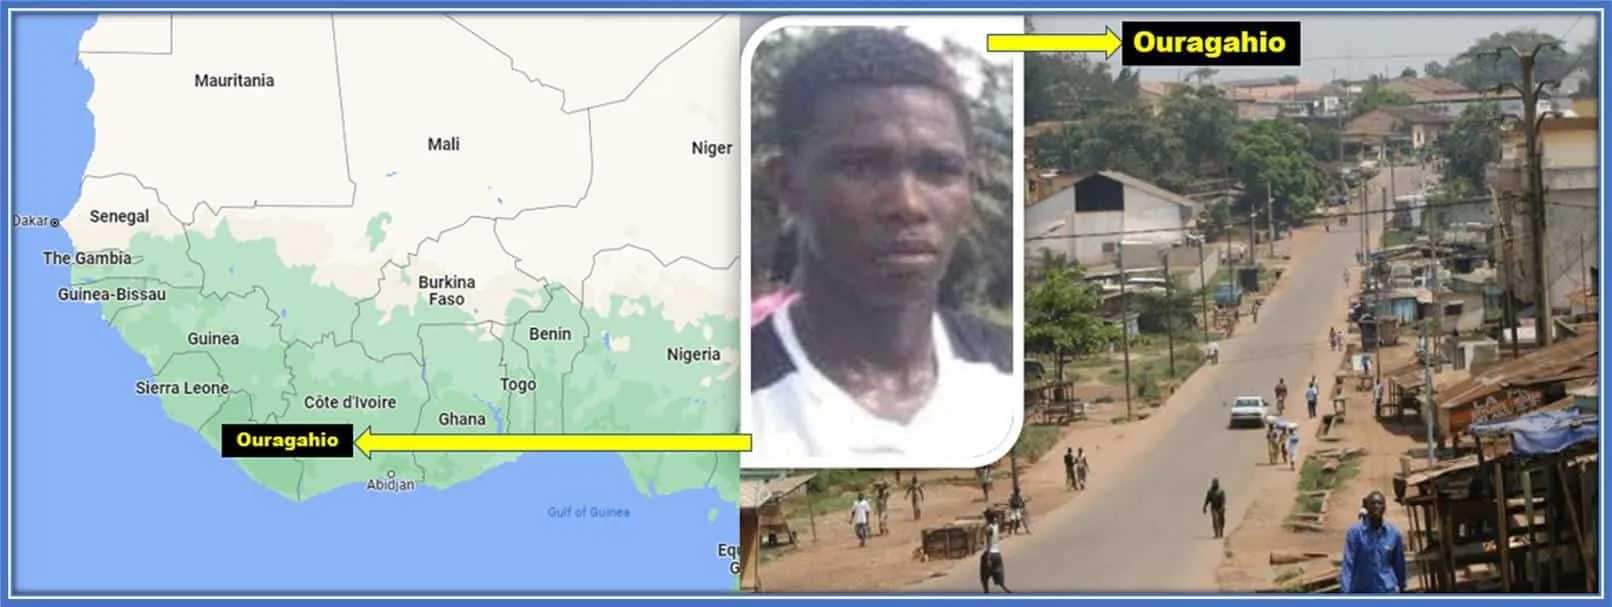 The Ivorian professional footballer has origins in Ouragahio, his hometown.